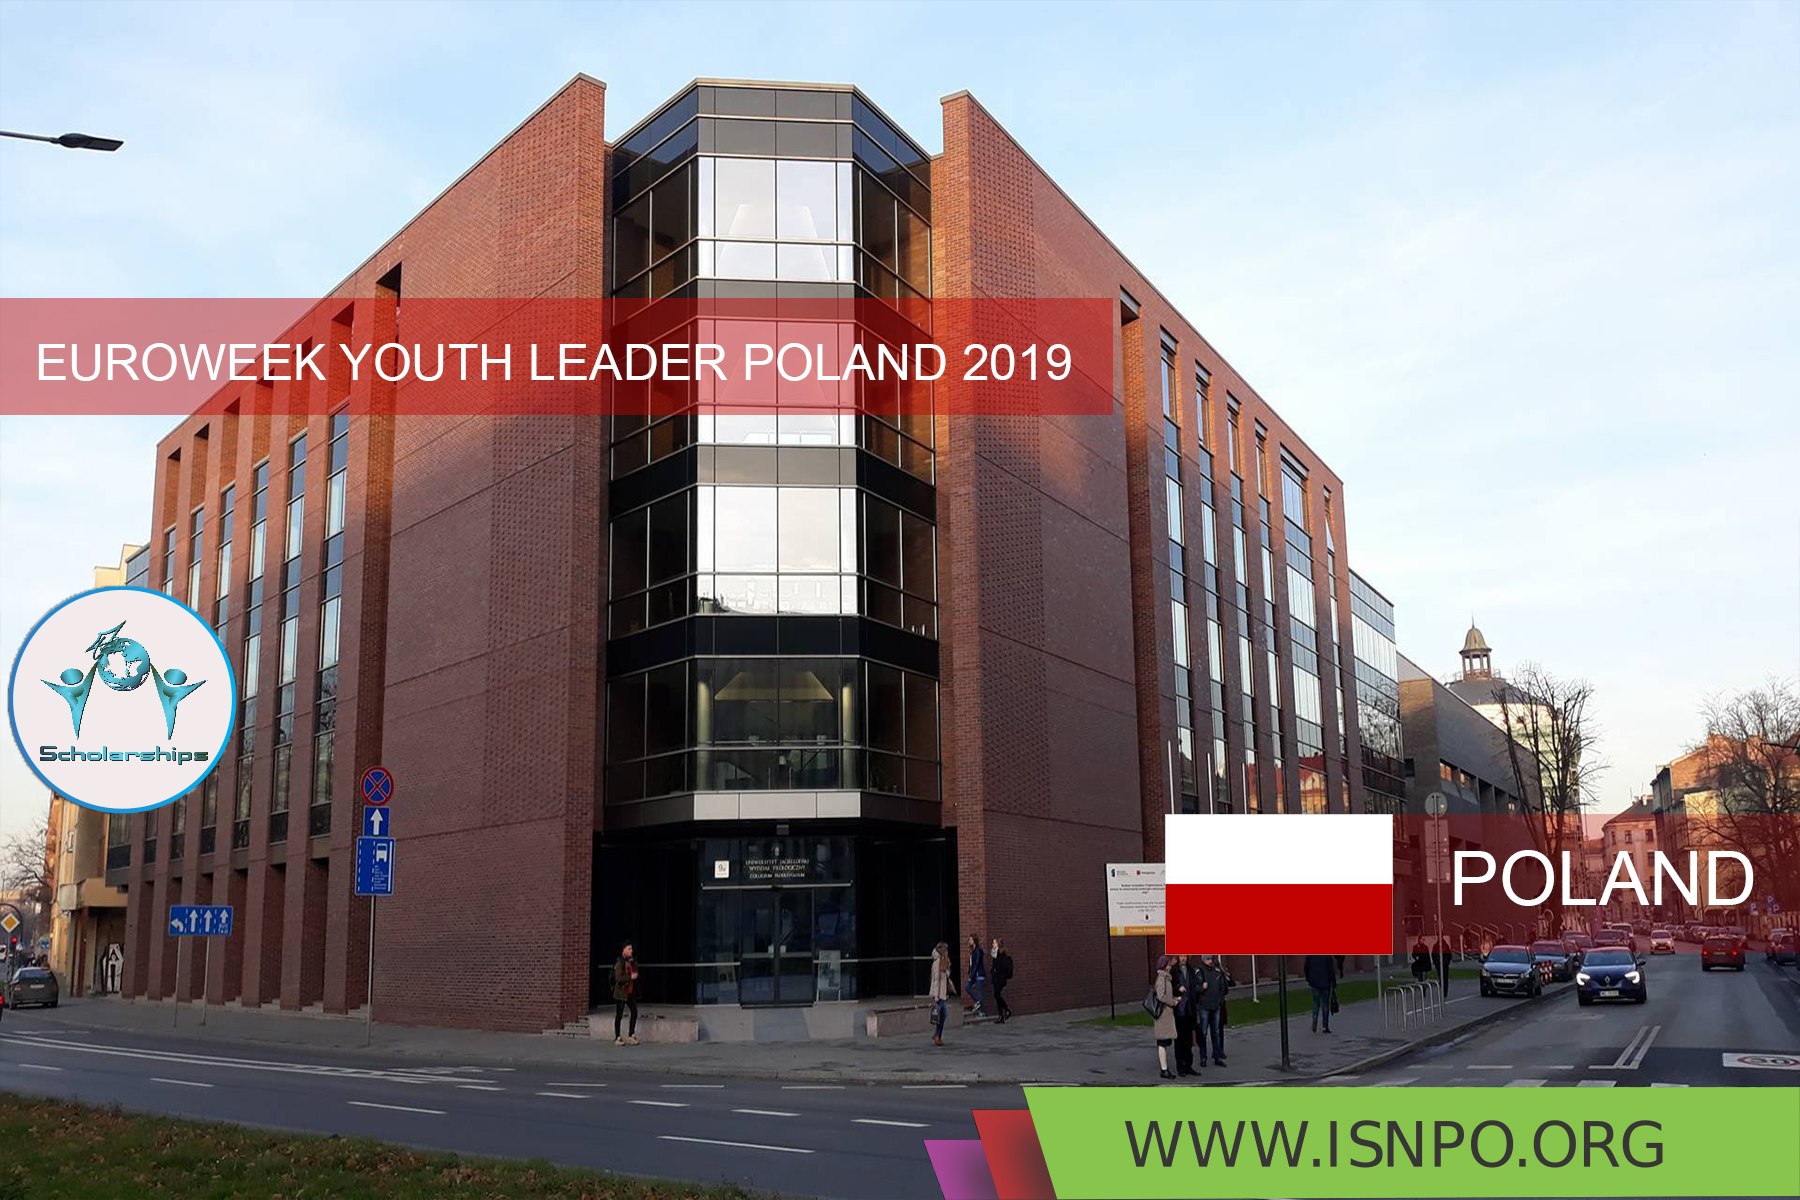 EUROWEEK YOUTH LEADER POLAND 2019